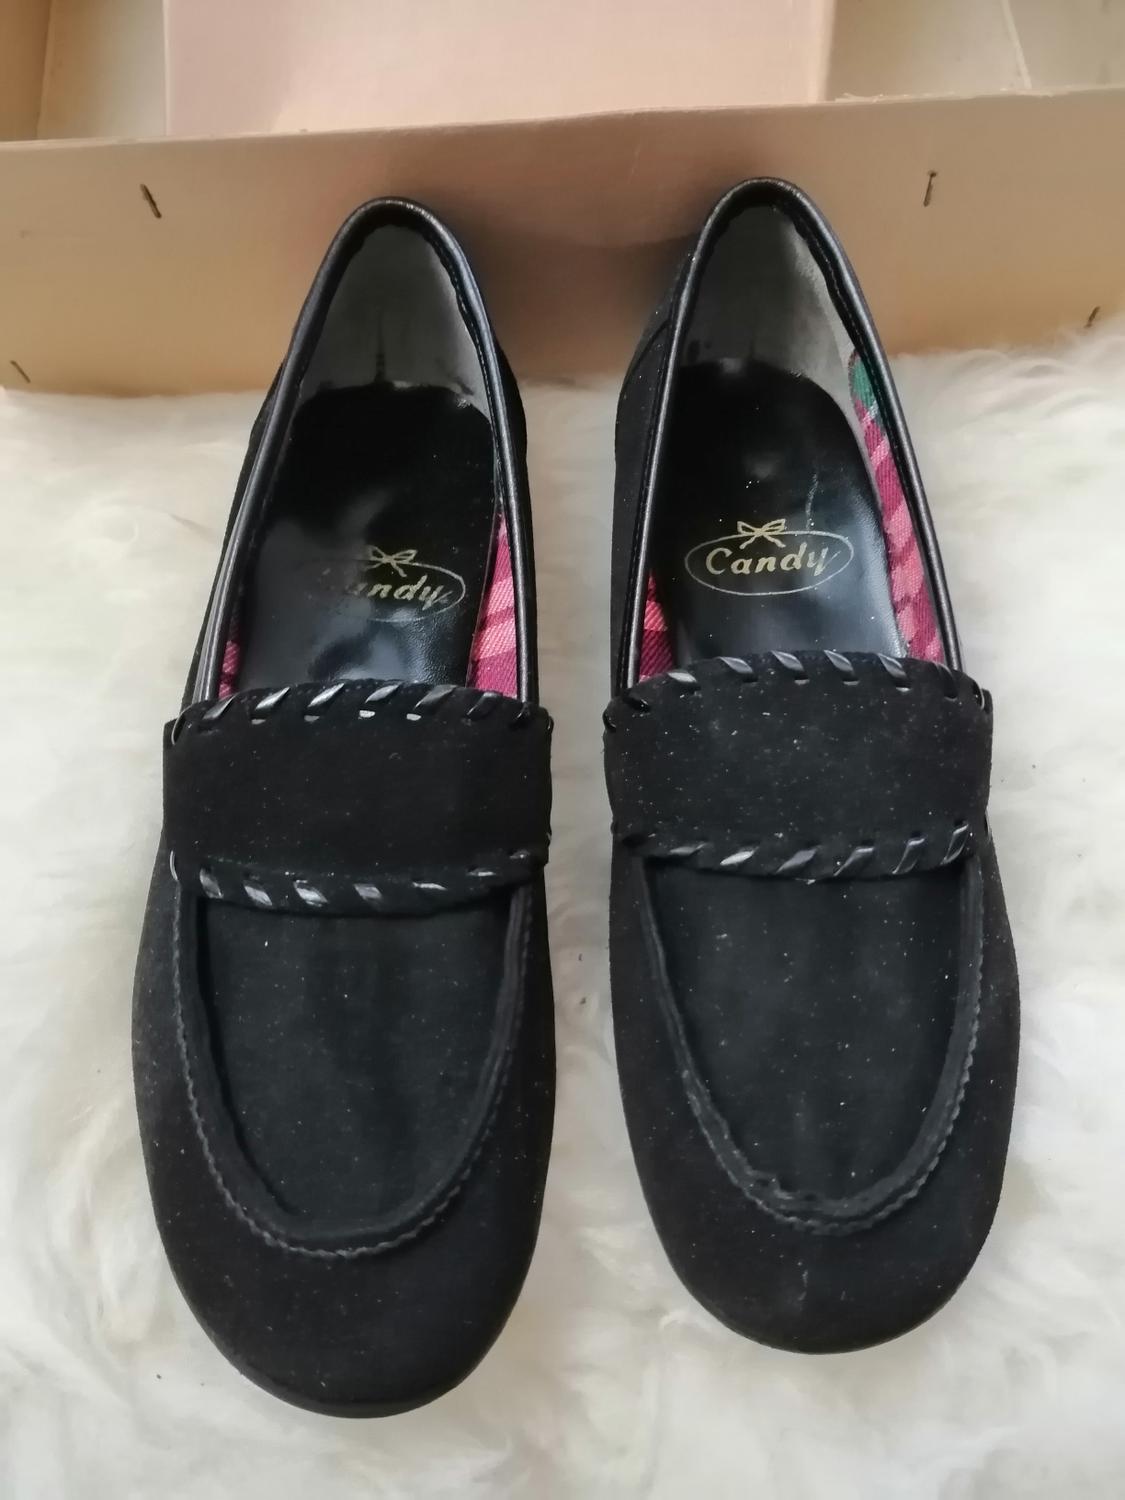 Vintage svart mocka-lofer sko kilklack stl 2,5 A ca 35